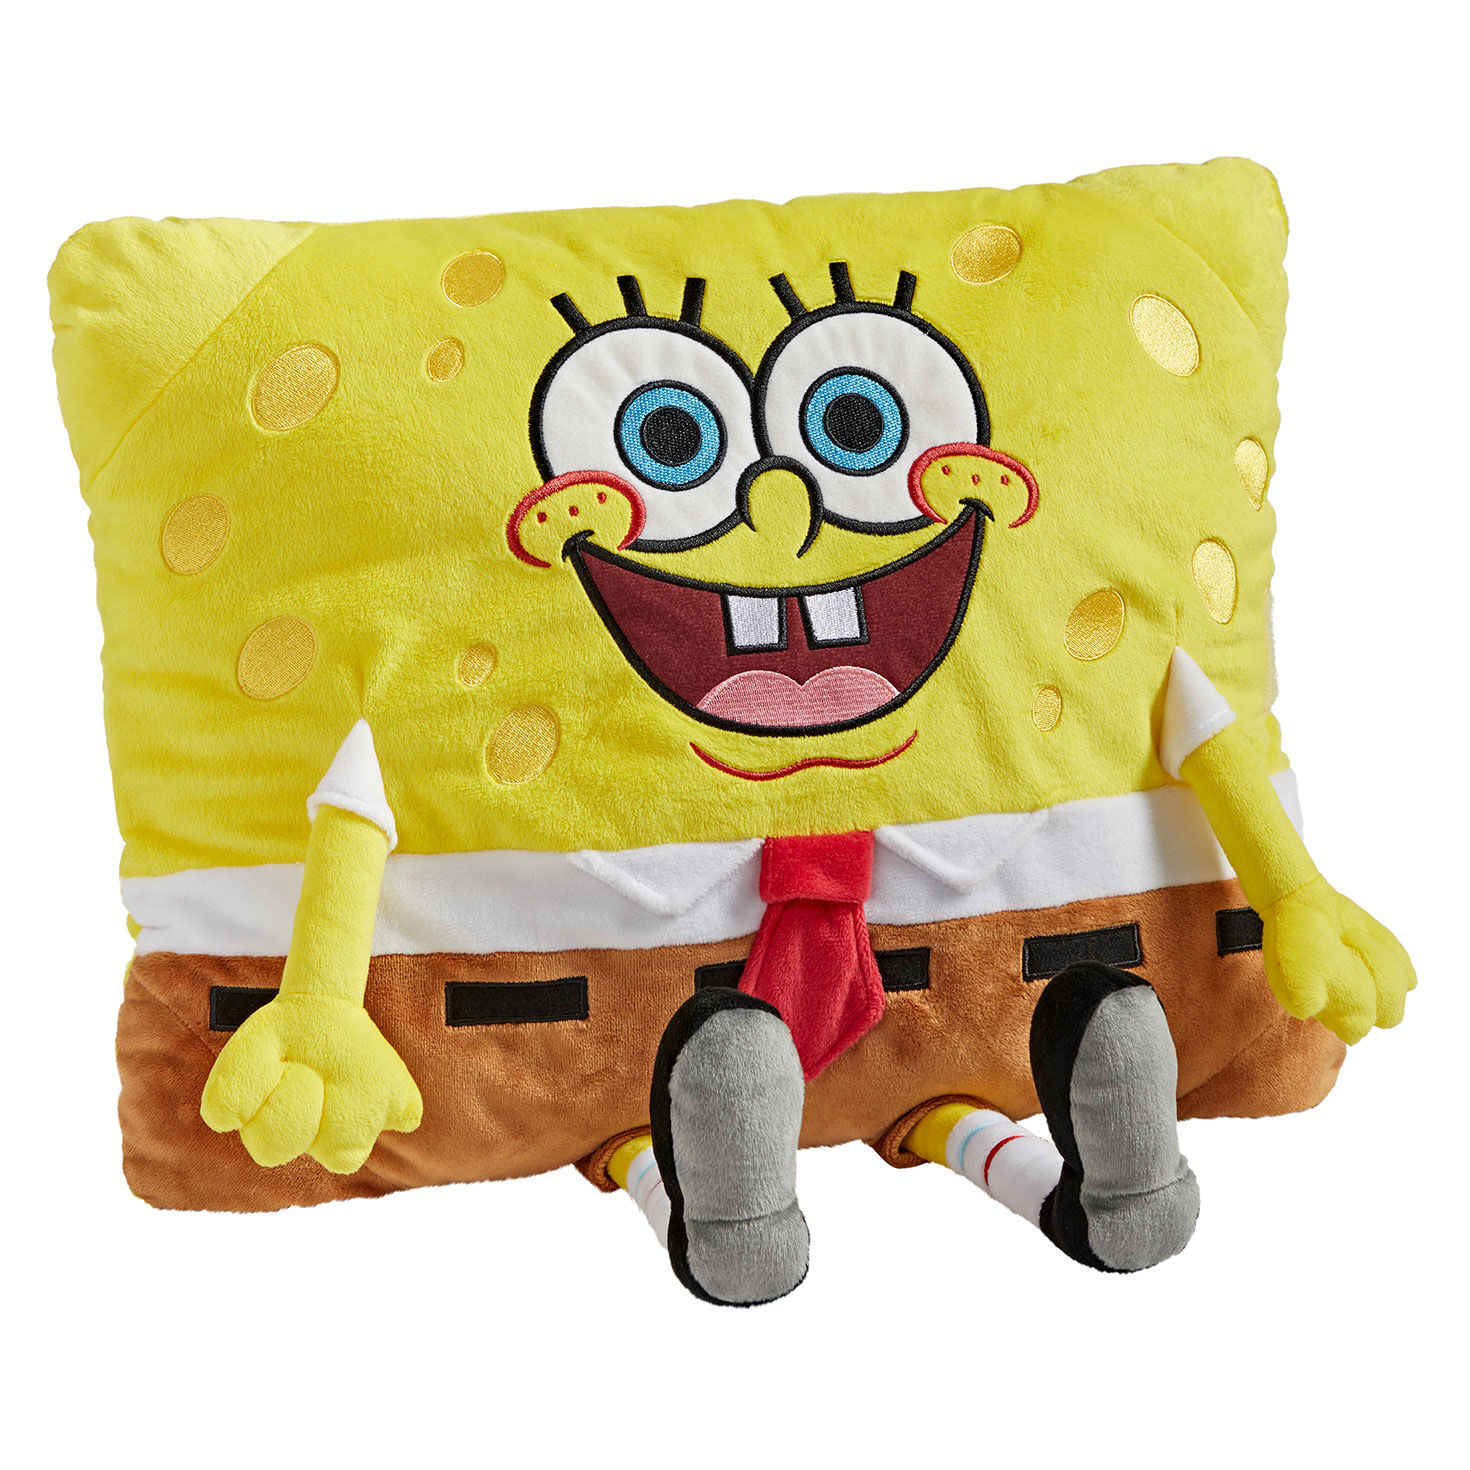 Pillow Pets Nickelodeon SpongeBob SquarePants Plush Toy, 16" for only USD 34.99 | Hallmark